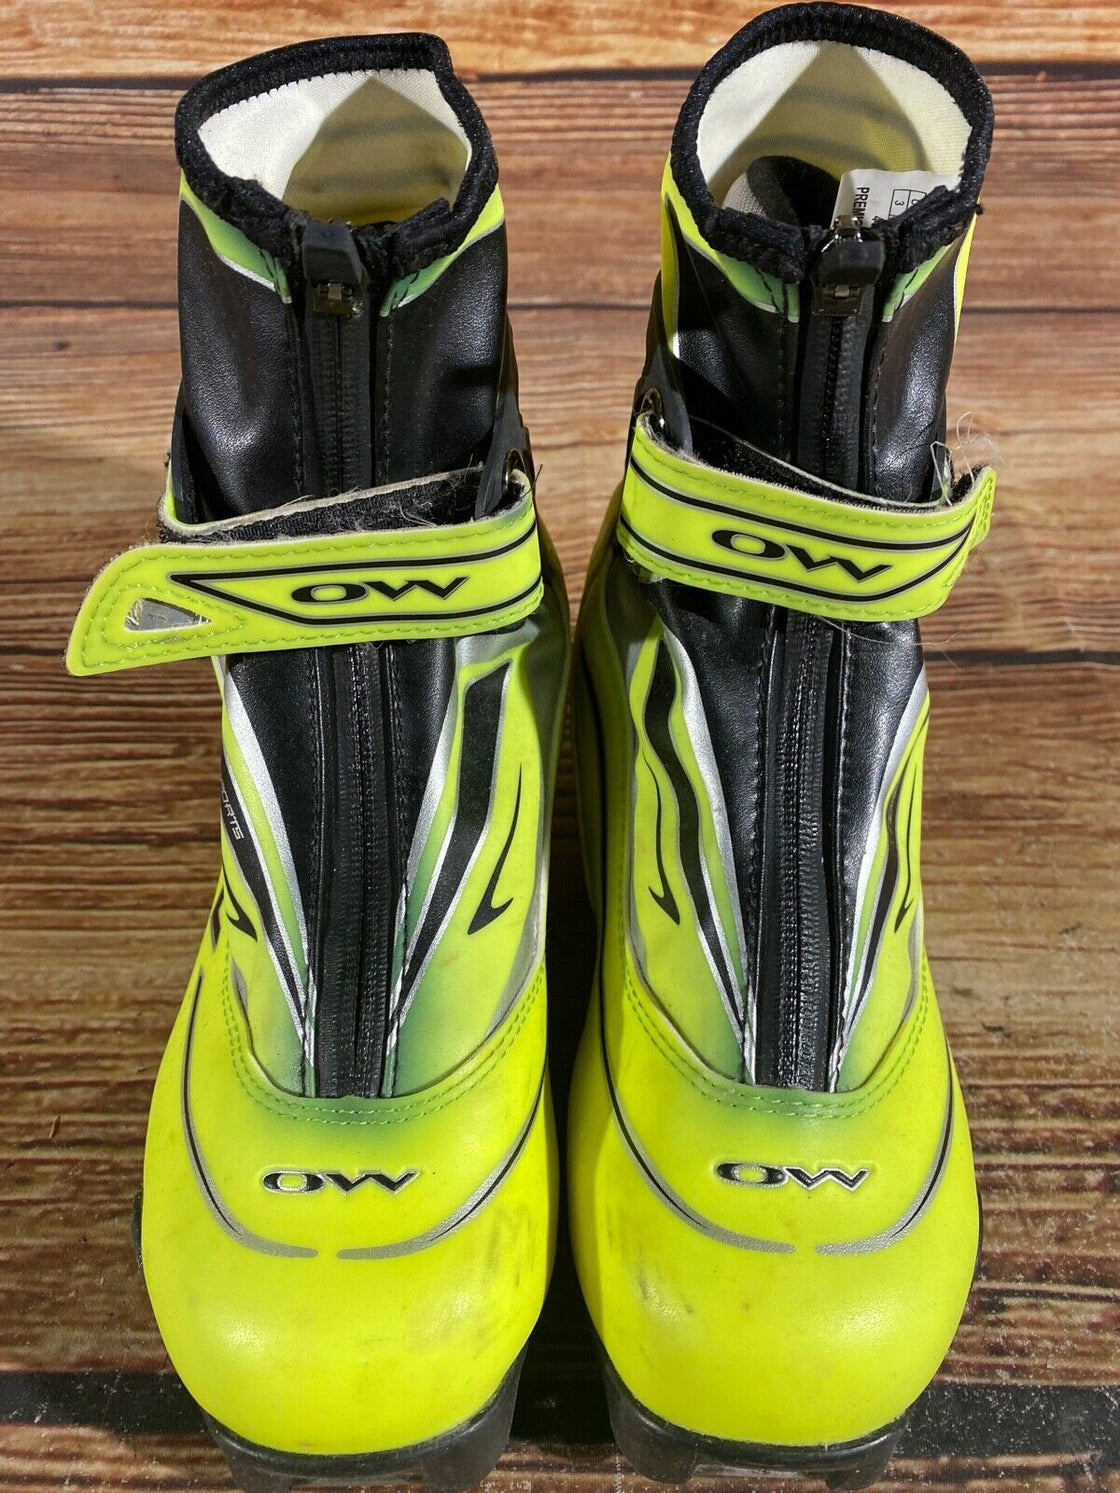 OW Combi Nordic Cross Country Ski Boots Size EU35 1/2 US4 SNS Pilot